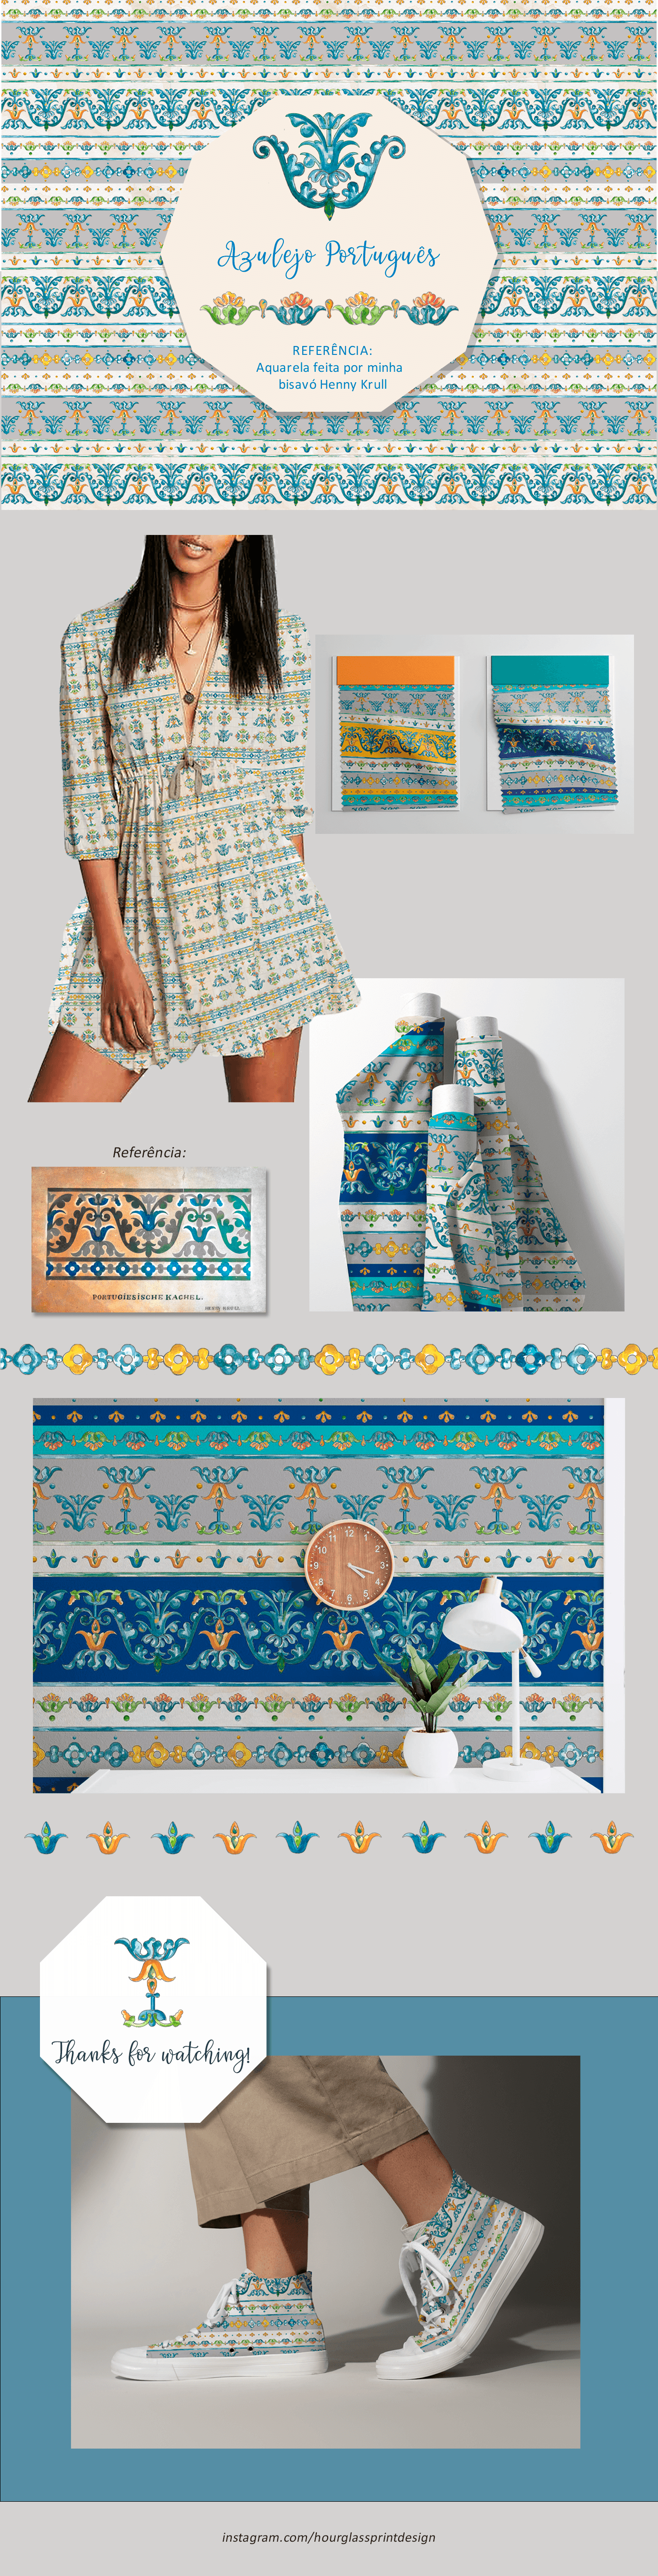 pattern design  print design  Azulejo portugues azulejo Portugal germany hamburg grandmother fliese kachel